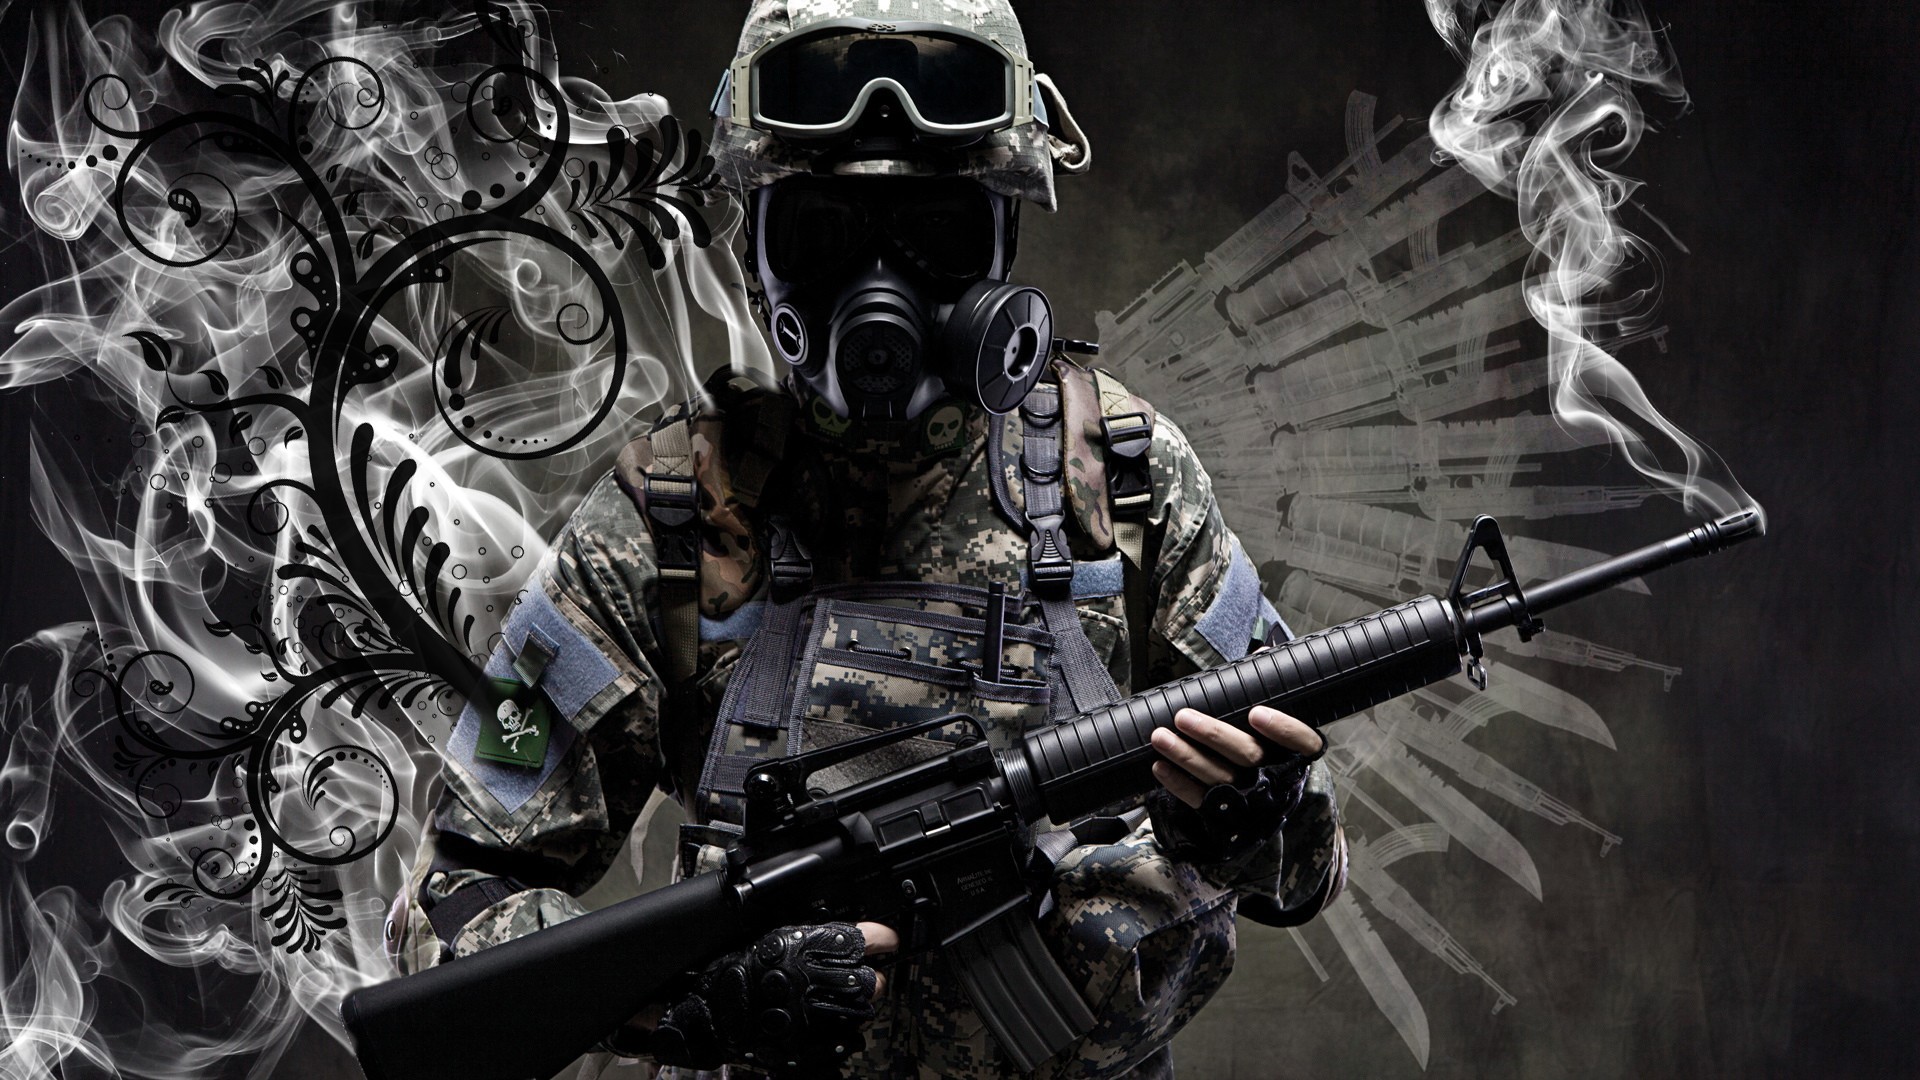 General 1920x1080 gas masks soldier weapon assault rifle M16 American firearms digital art